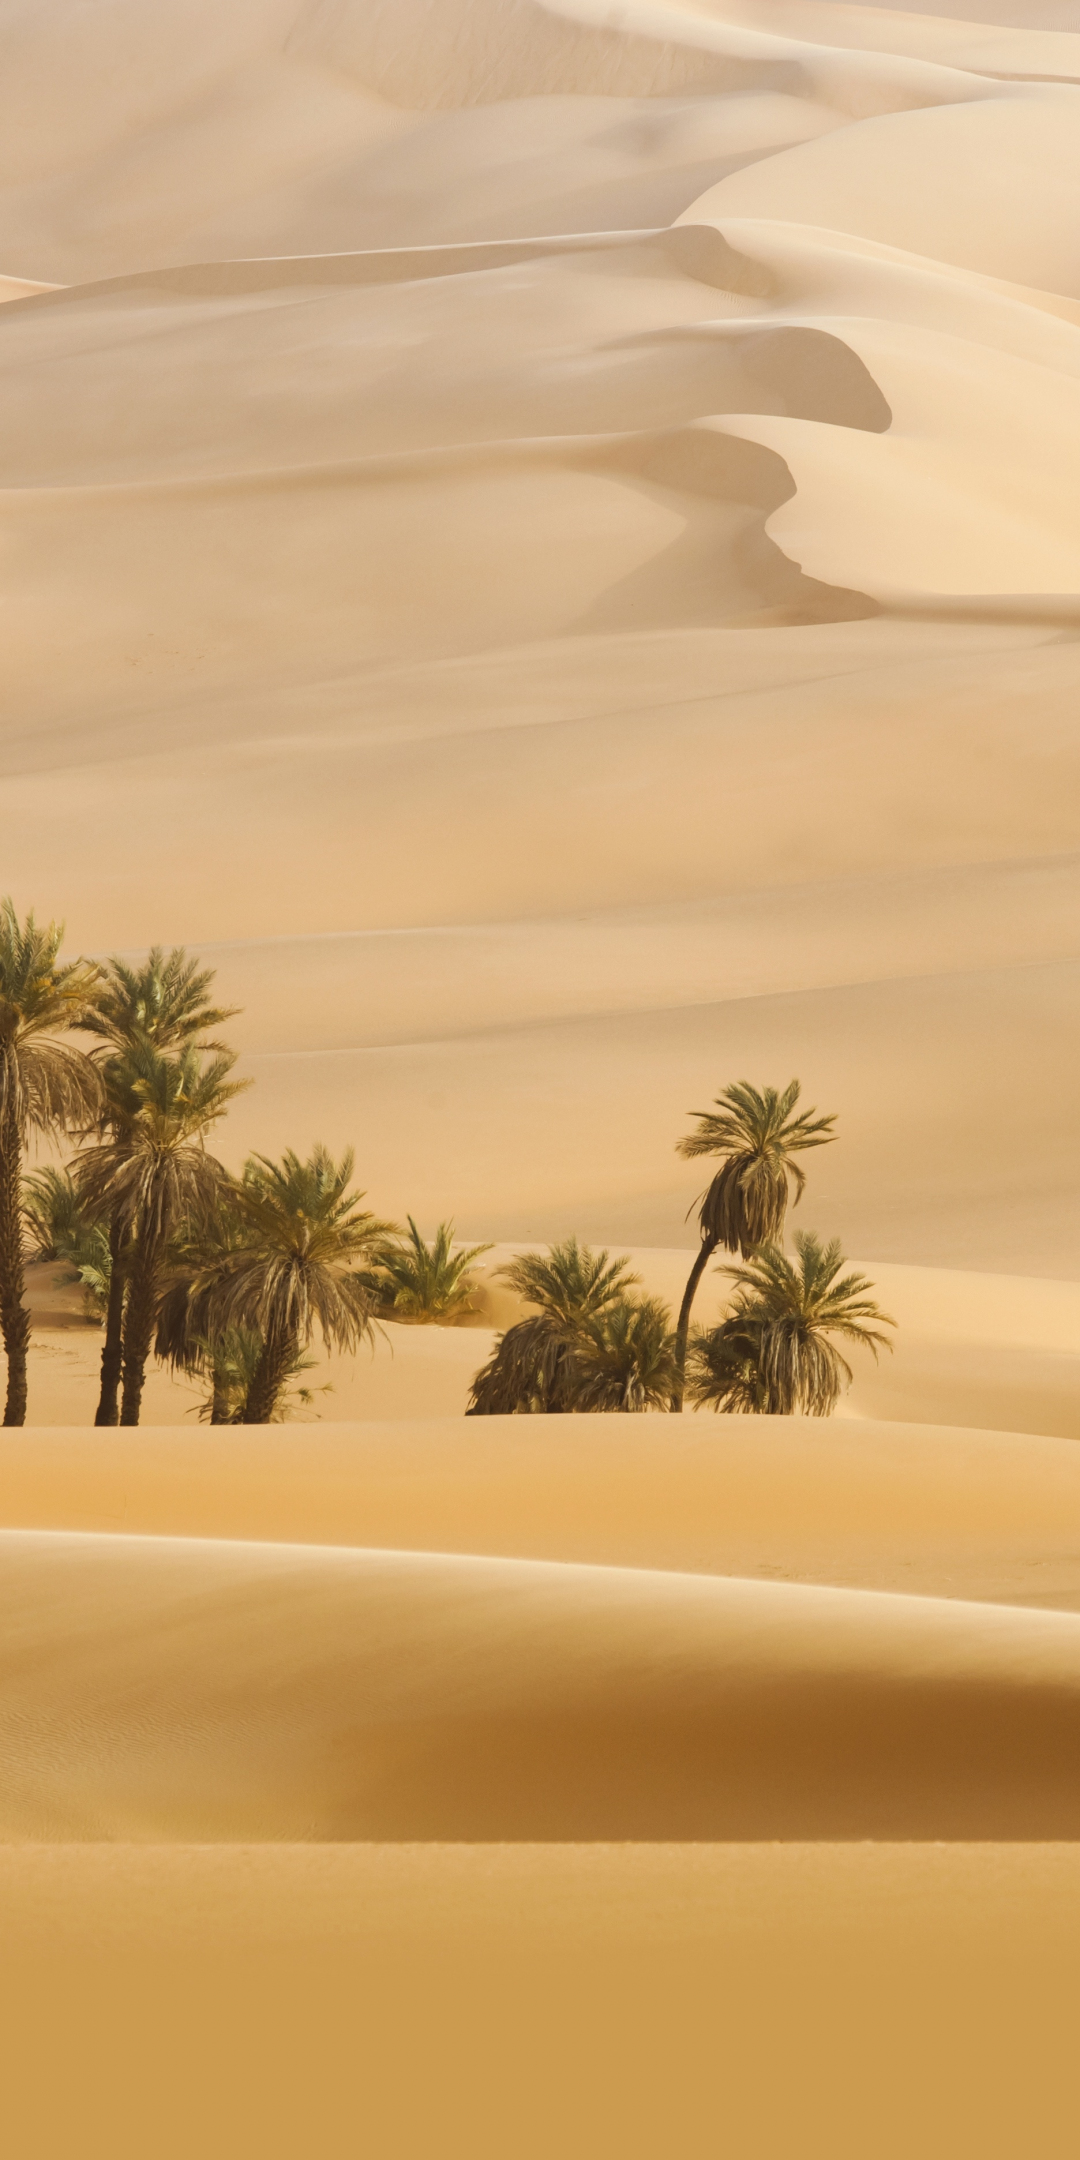 Landscape, desert, palm trees, 1080x2160 wallpaper